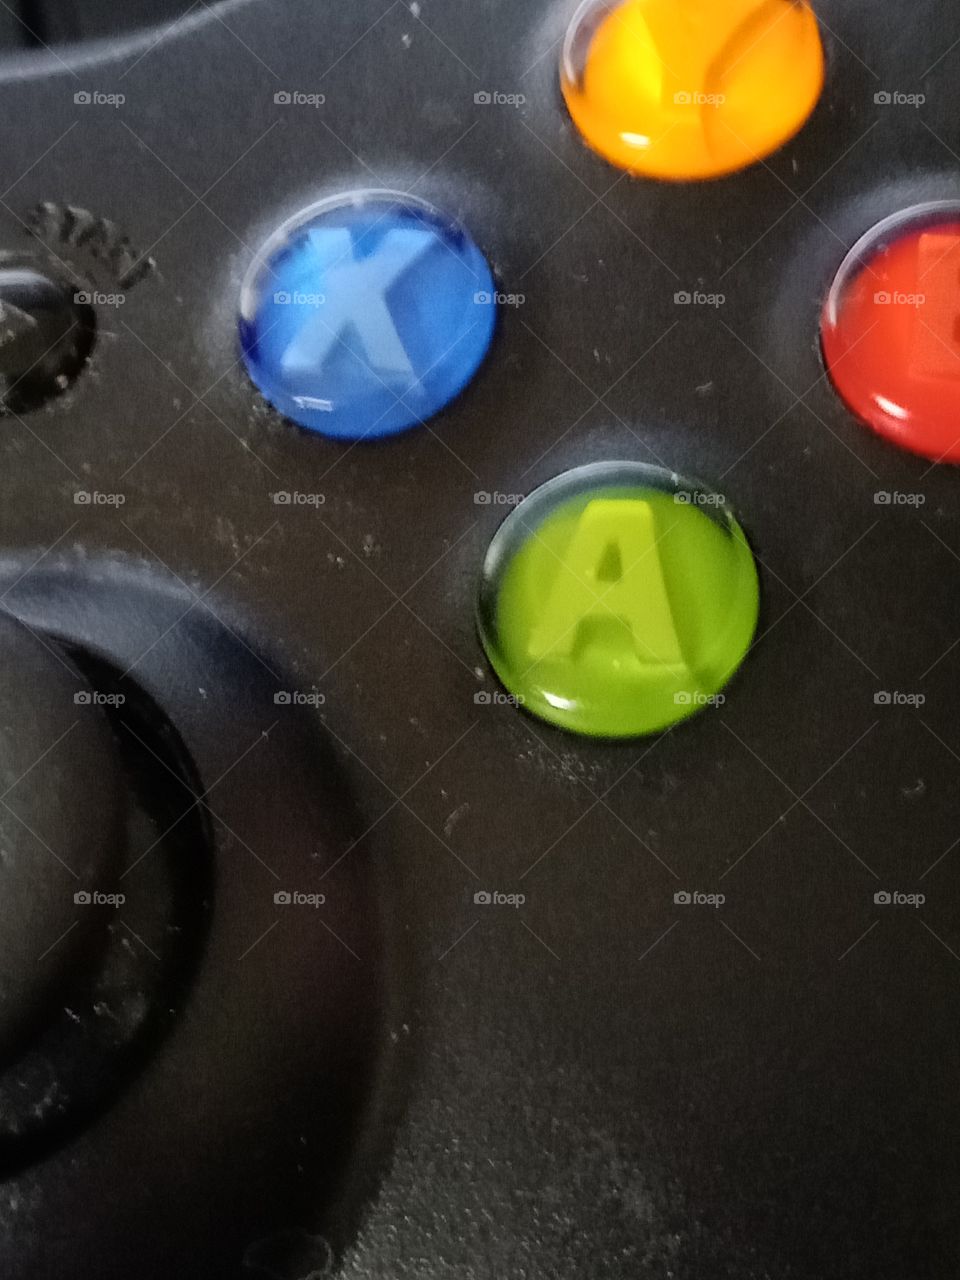 a video game controller up close